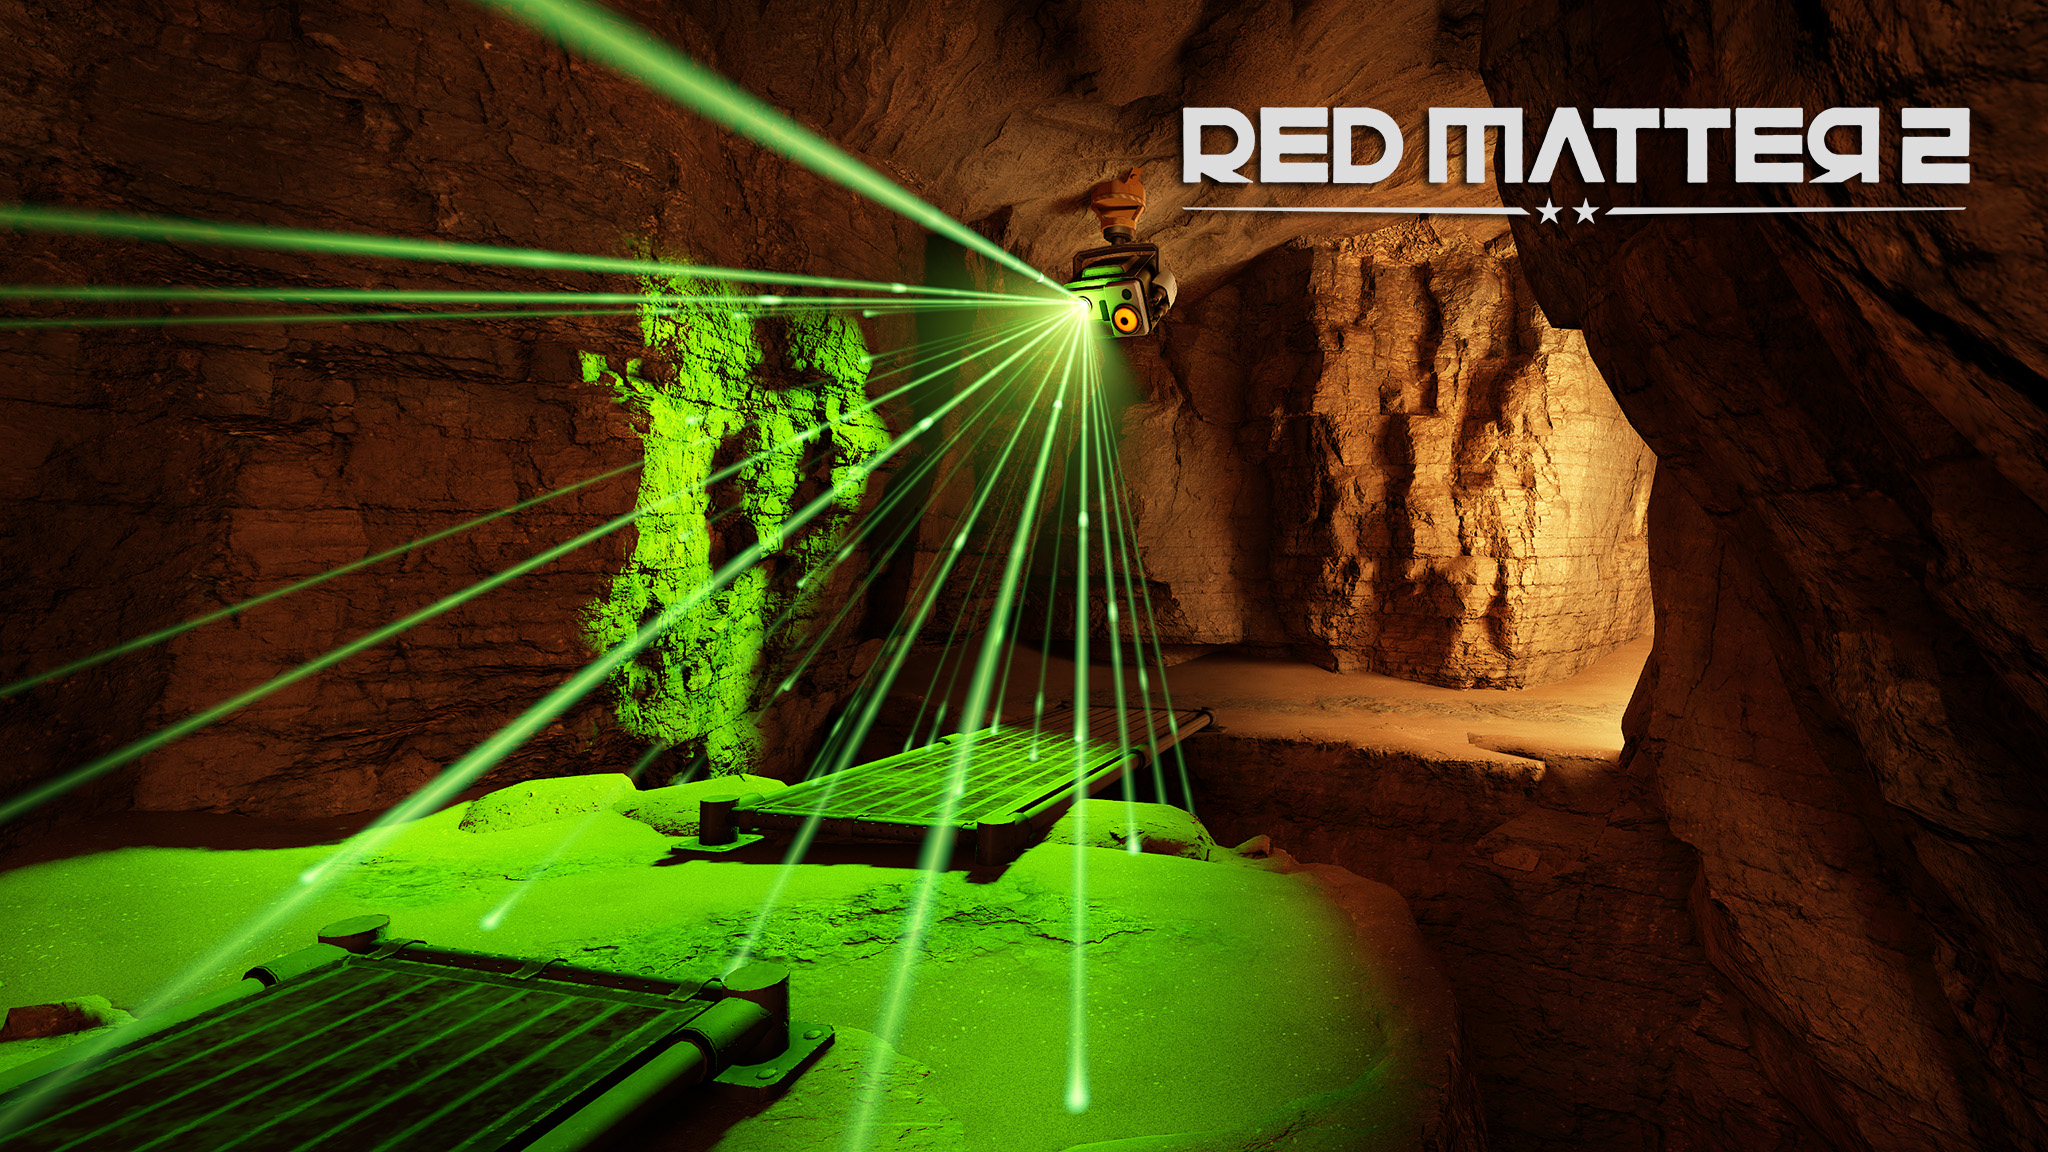 Red Matter 2 screenshots from the Quest 2